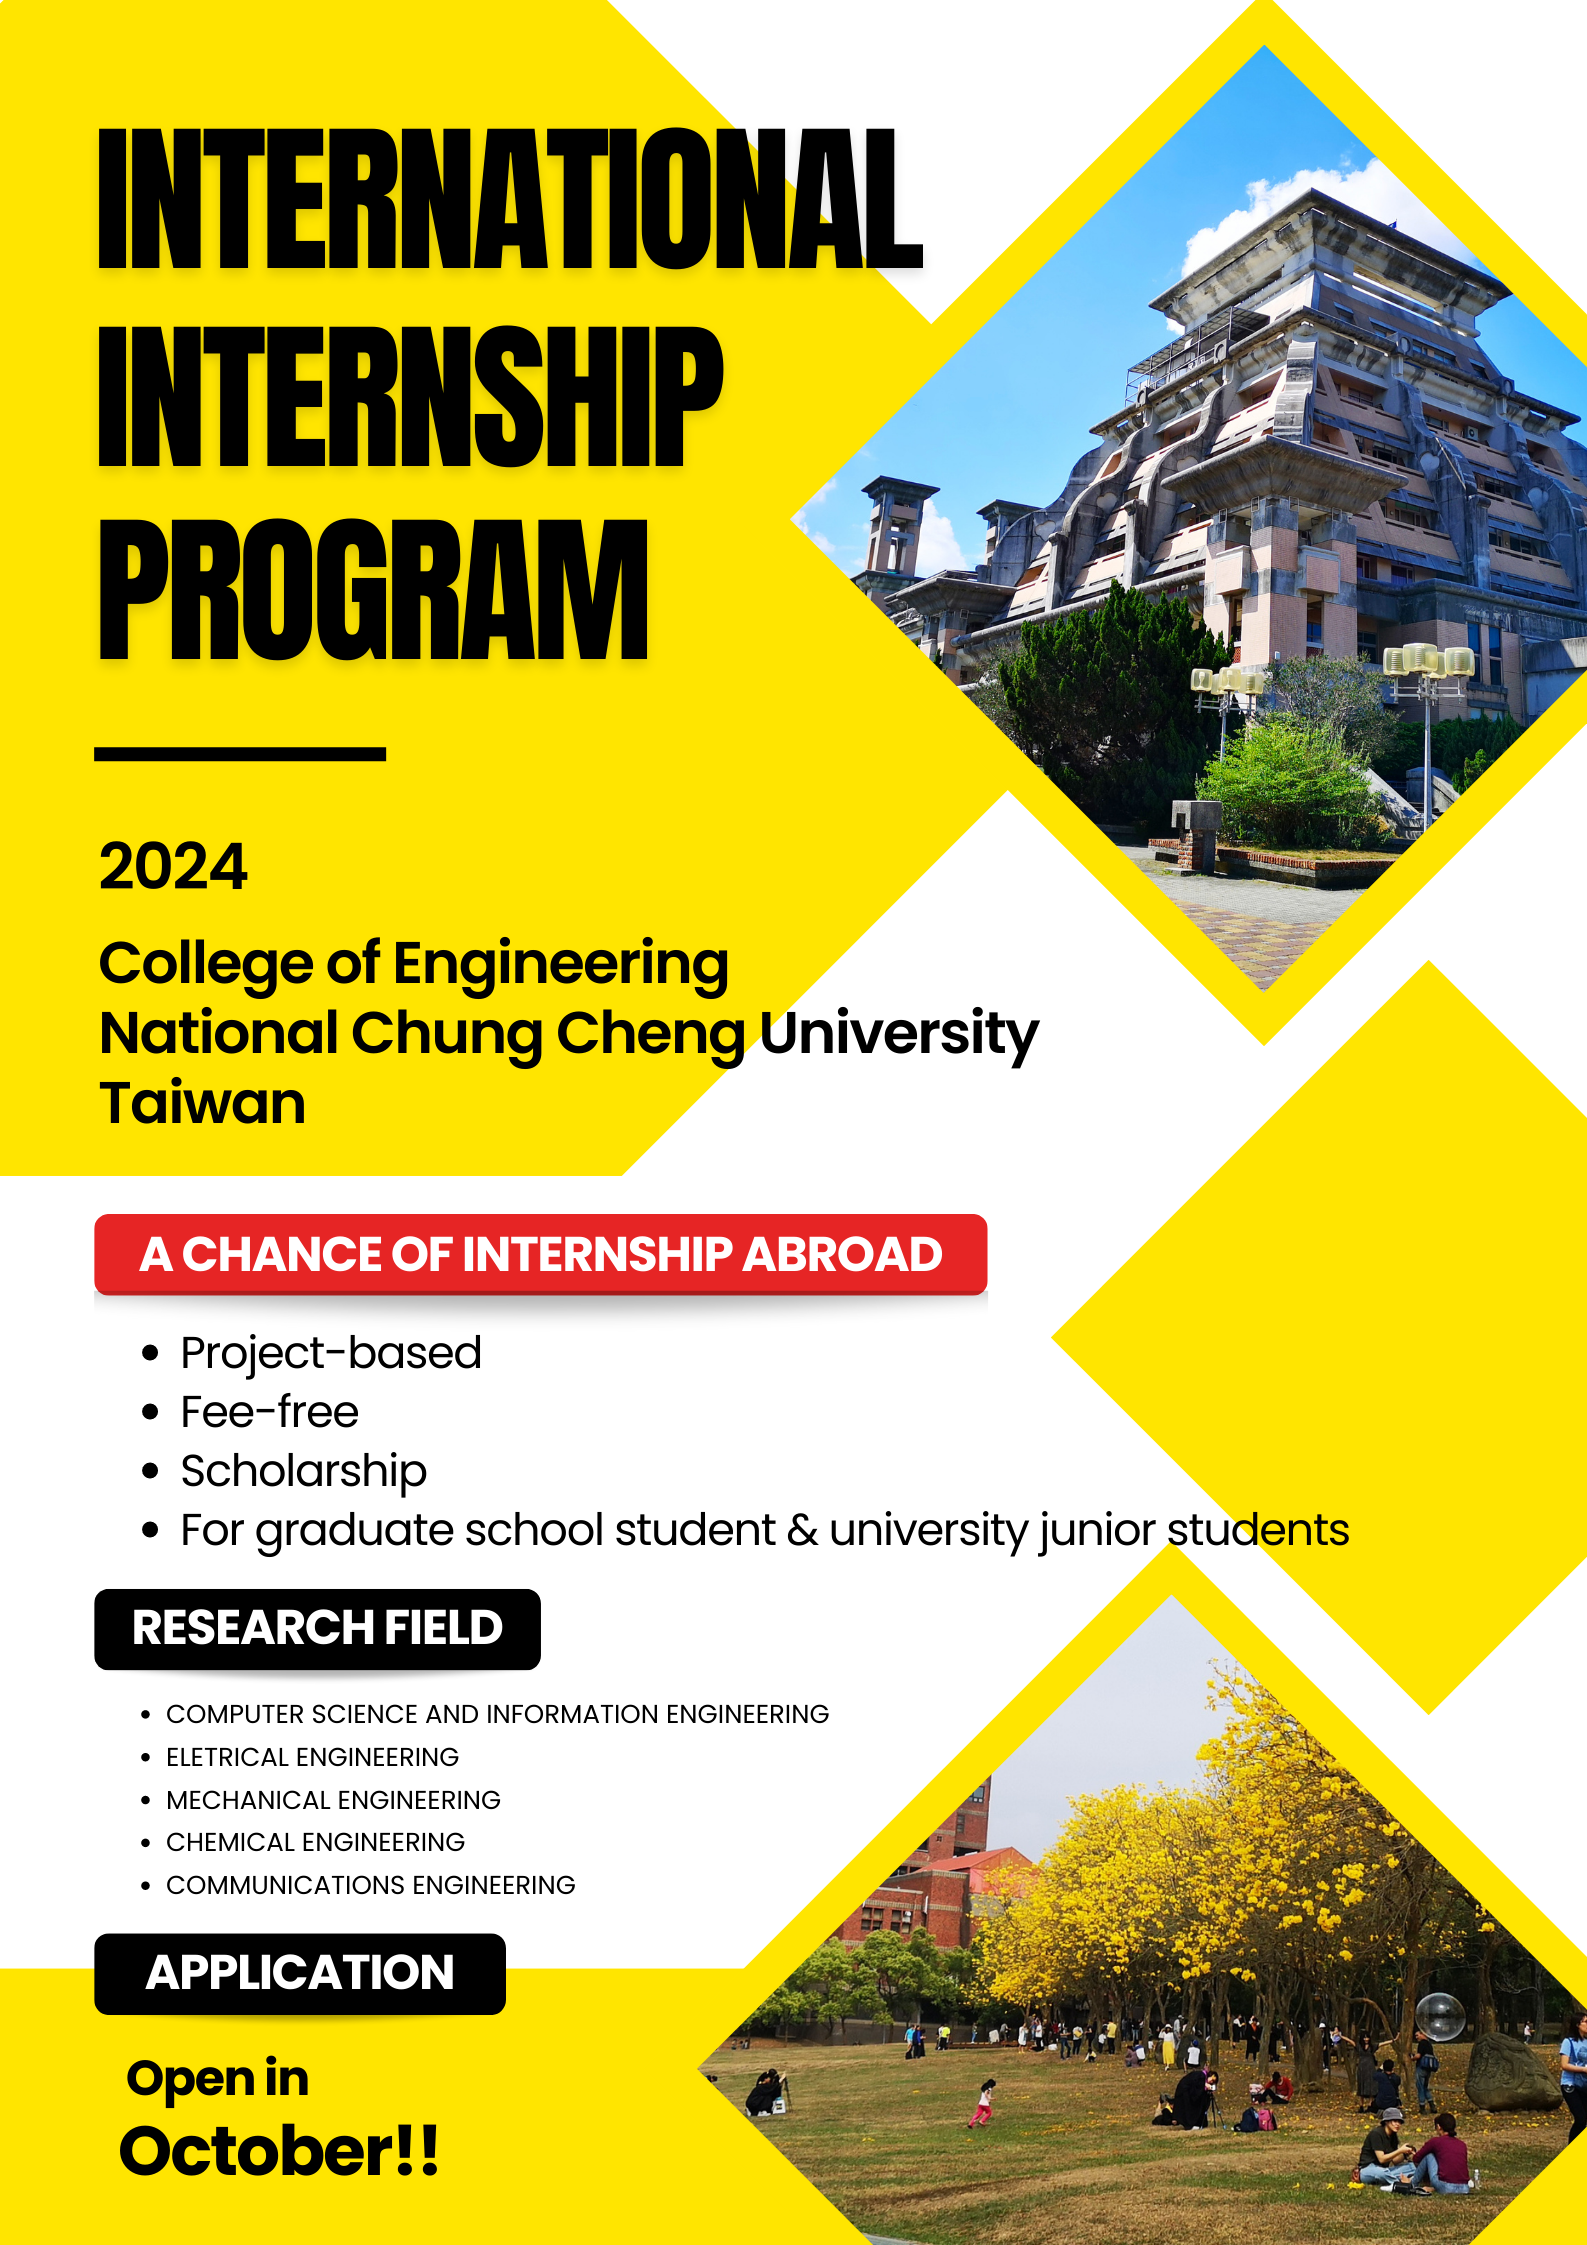 Upcoming Announcement in October for 2024 CCU International Internship Program